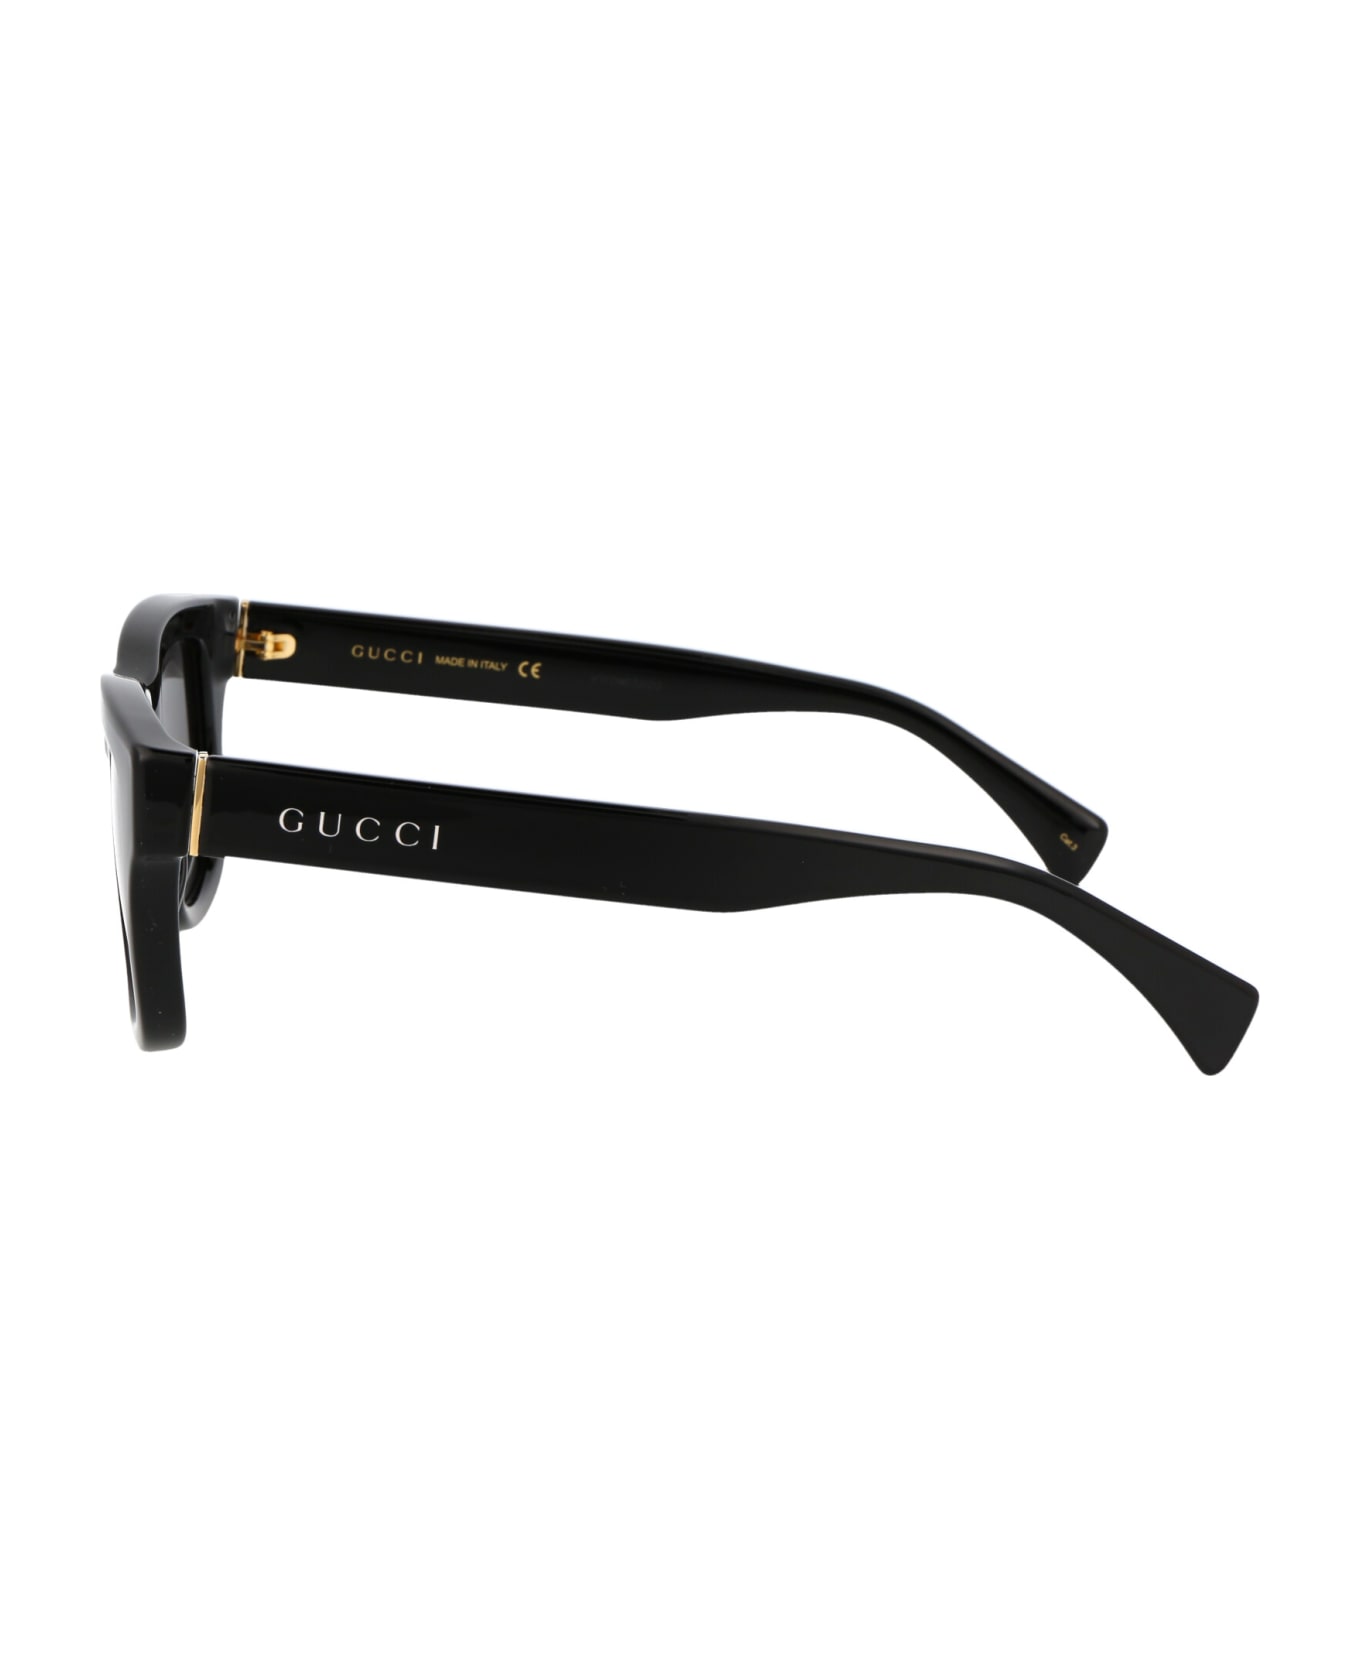 Gucci Eyewear Gg1135s Sunglasses - 002 BLACK BLACK GREY サングラス